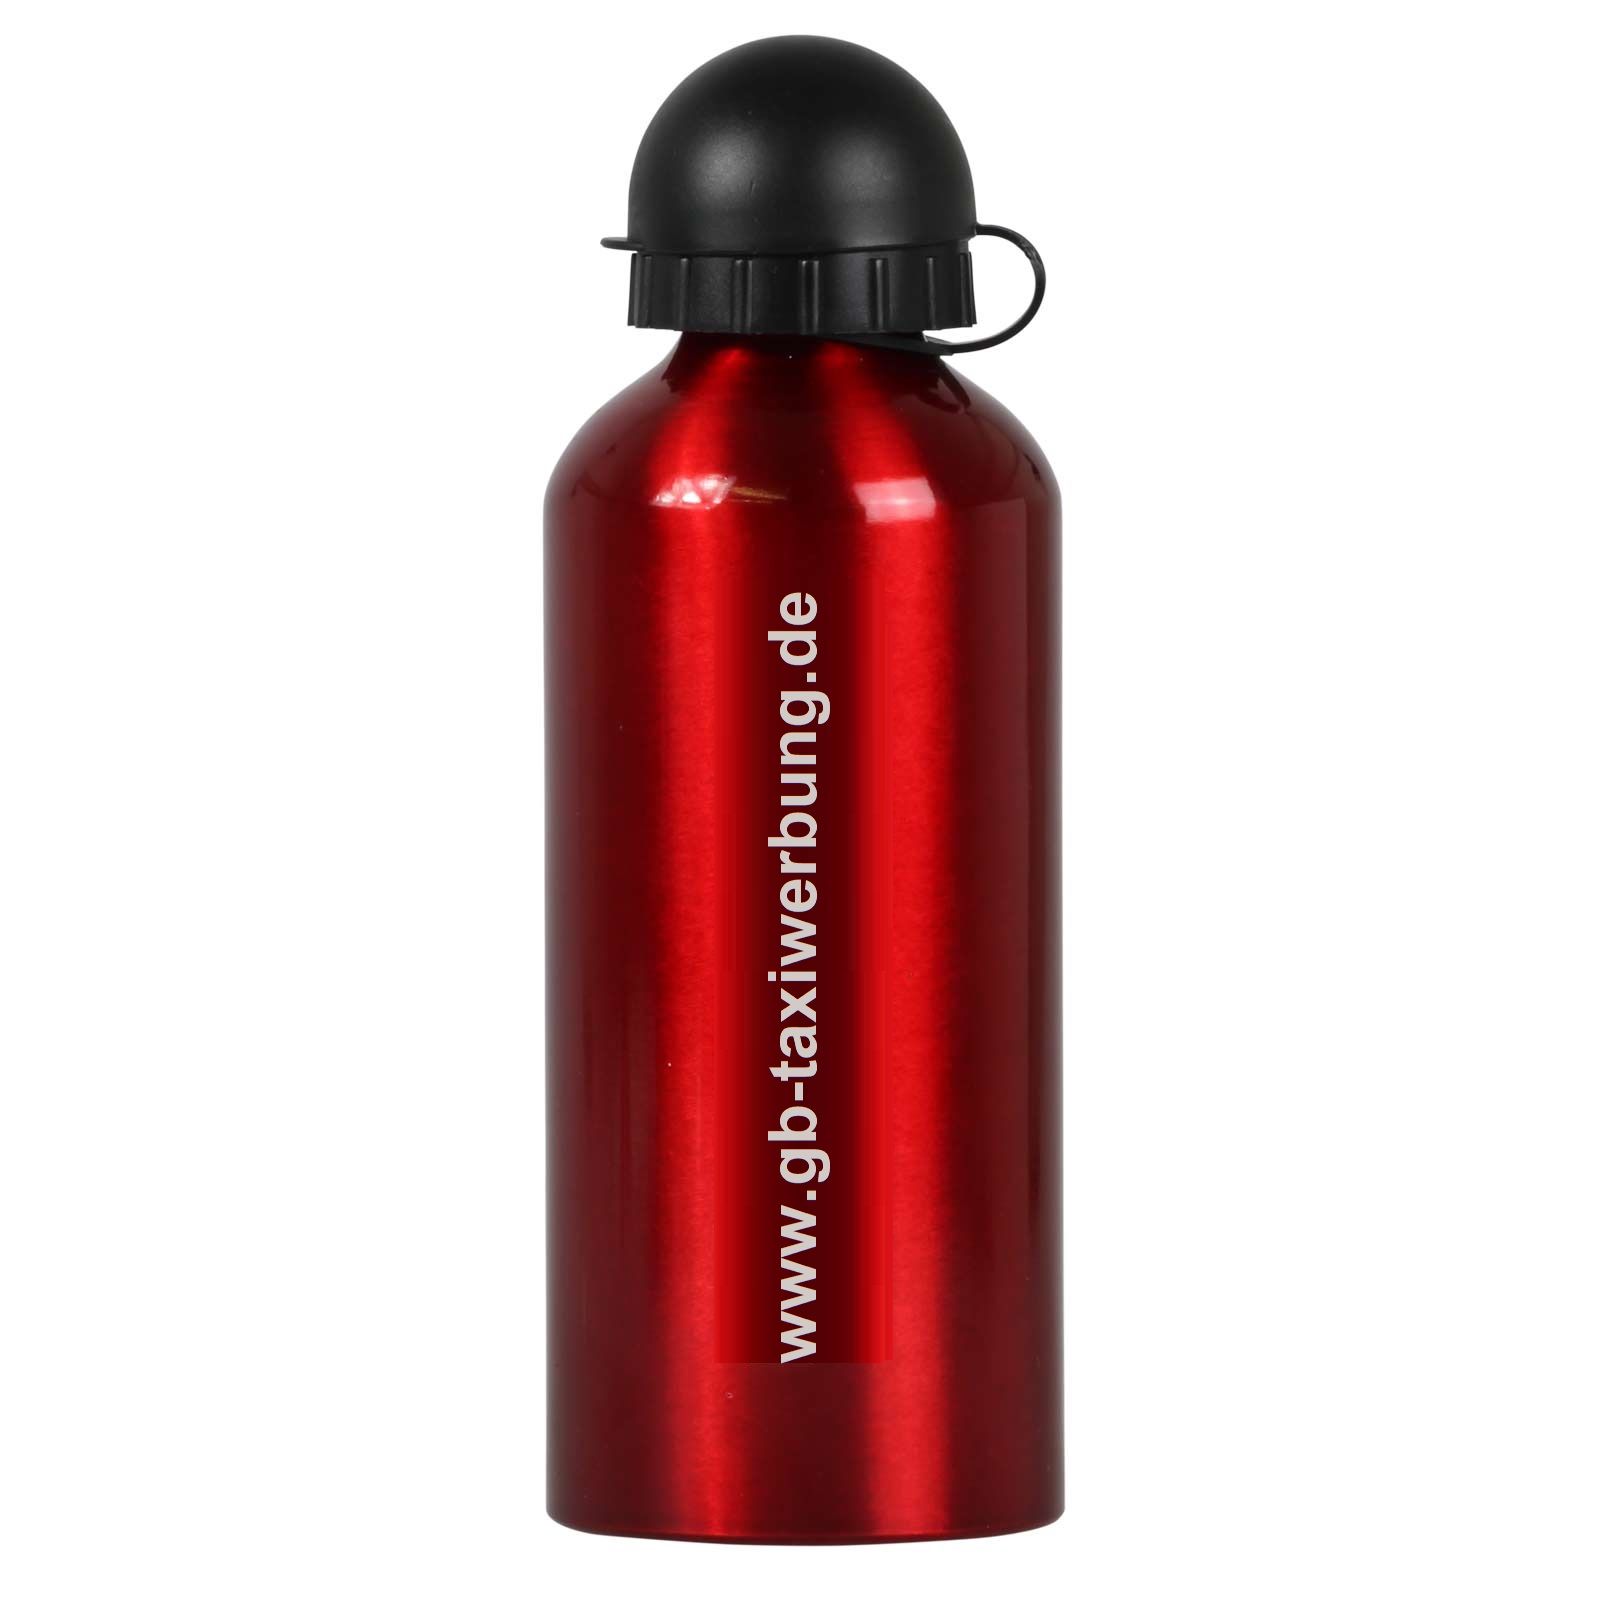 Trinkflasche 0,6l aus Aluminium inkl. Lasergravur (Personalisierung)